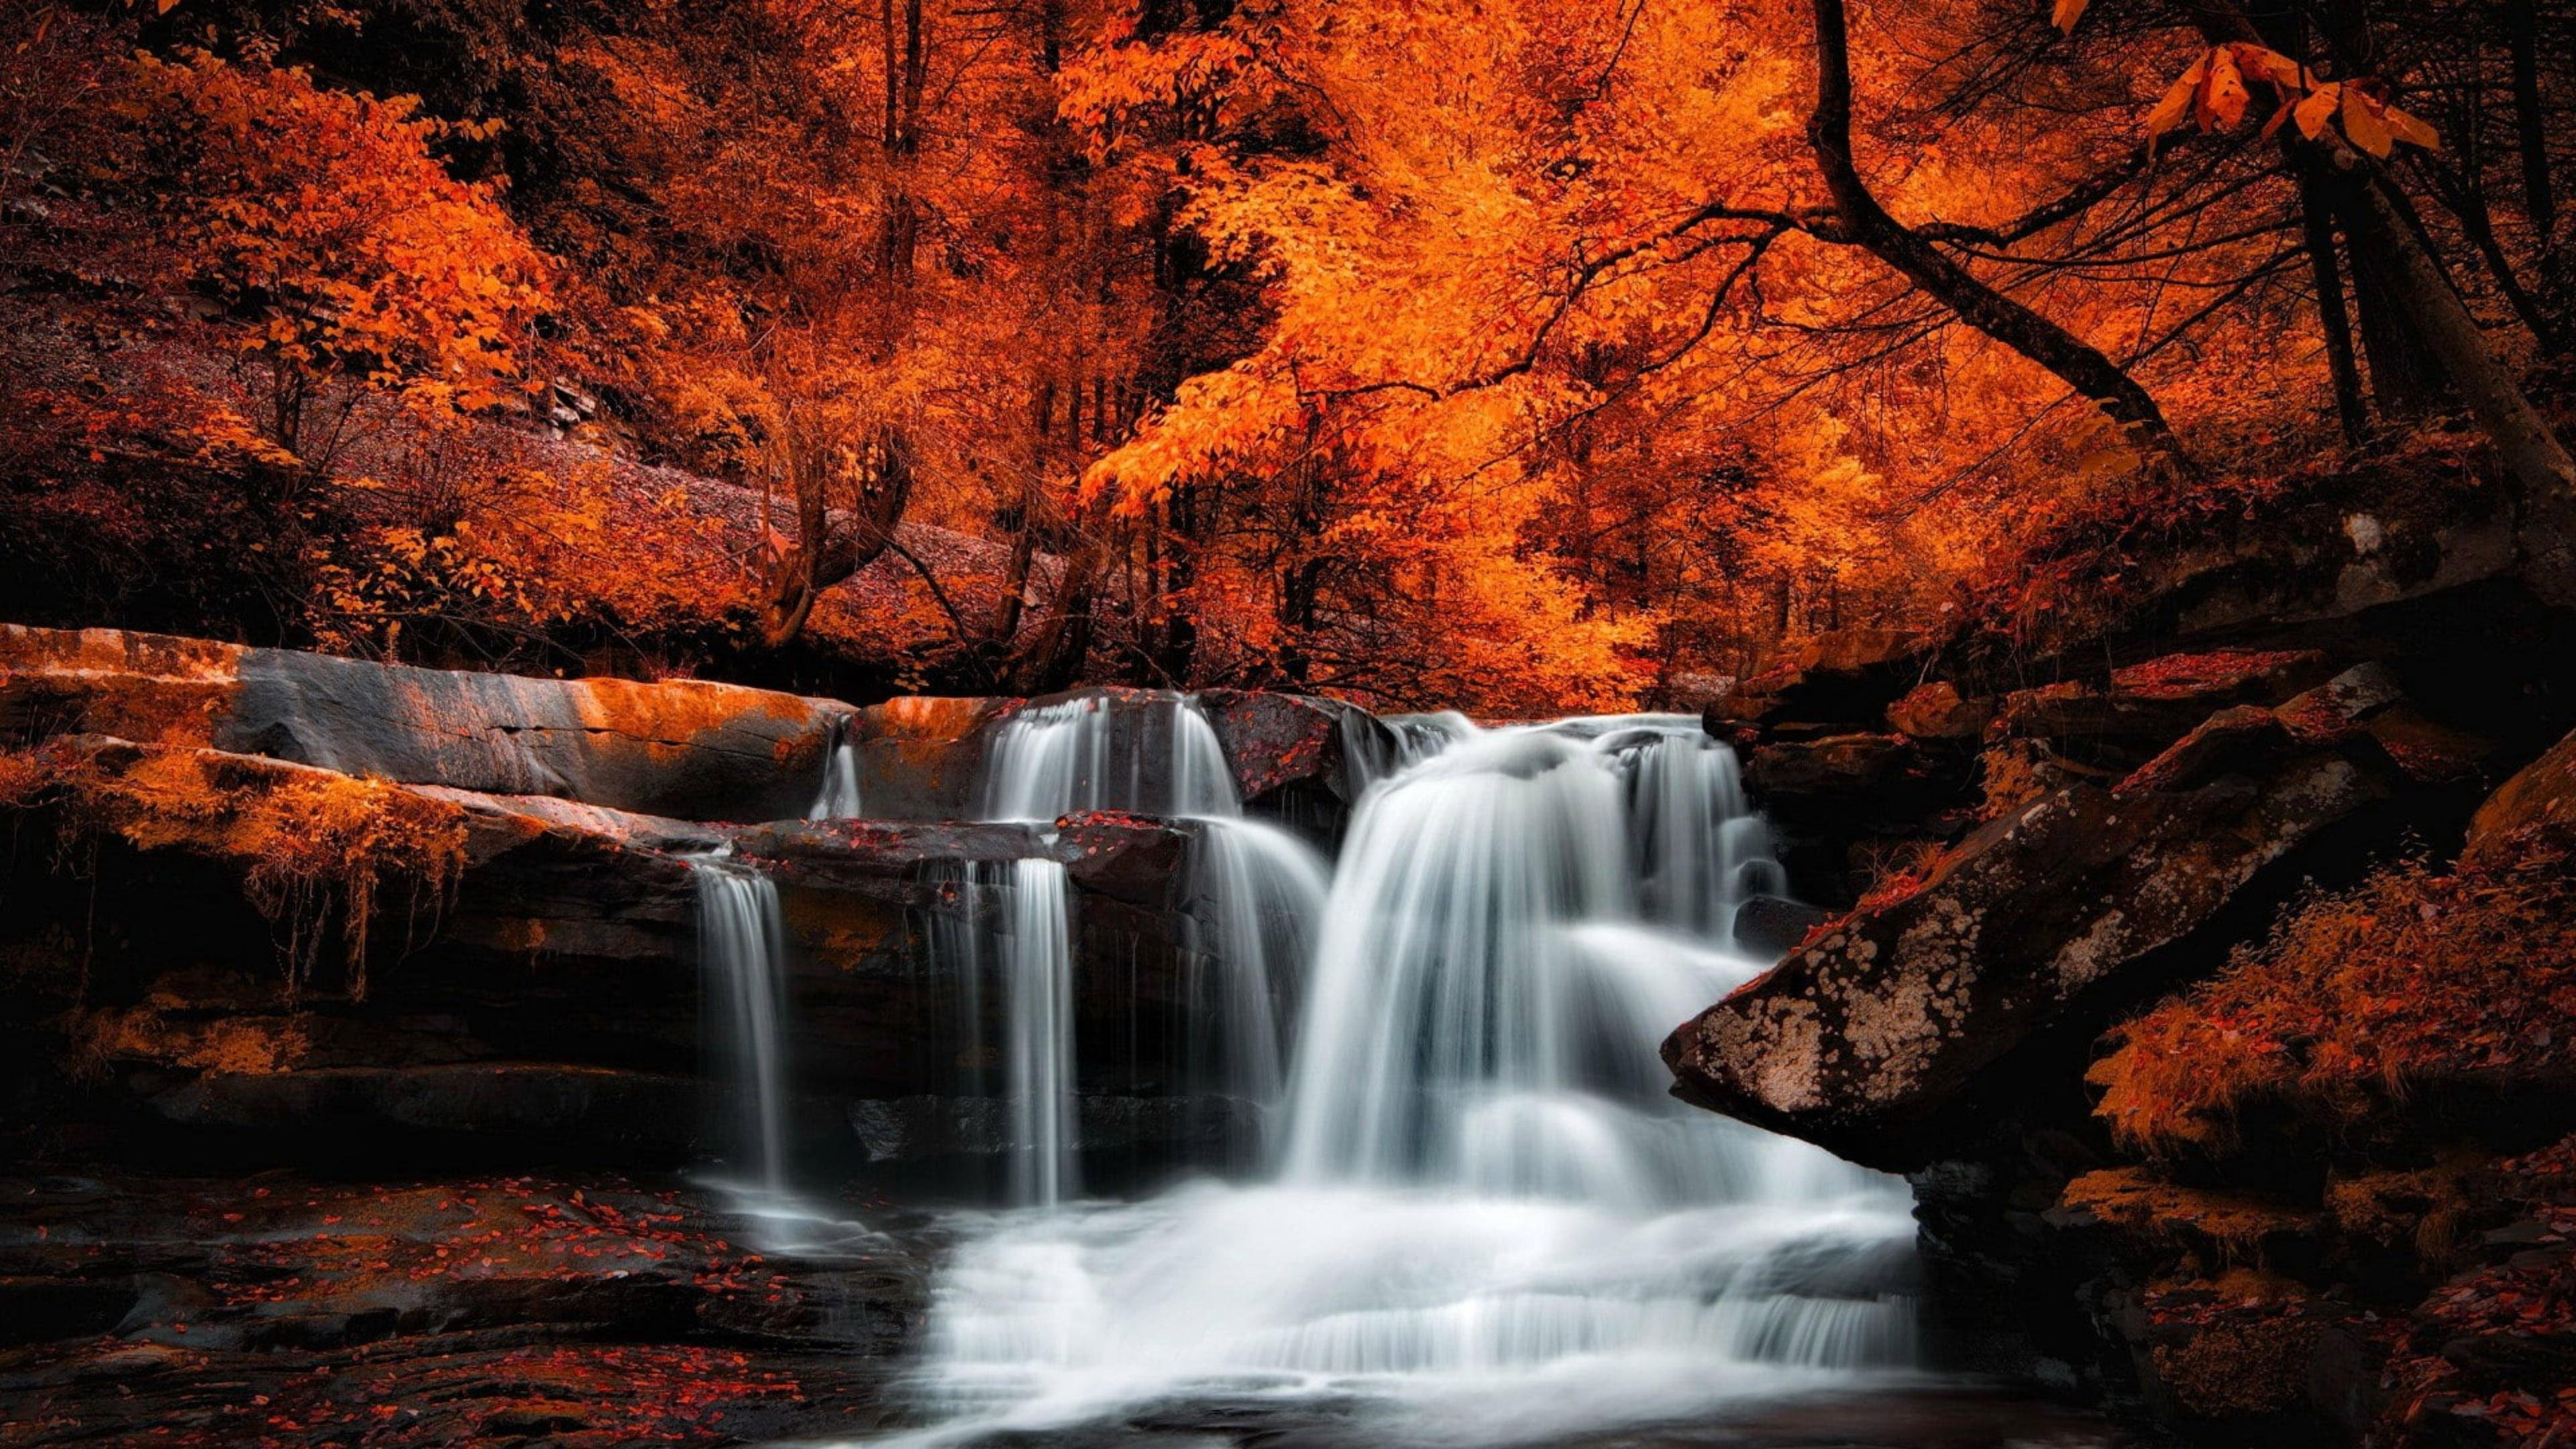 Rasmlar kompyuter. Природа. Красивая природа. Красивые пейзажи с водопадами. Осенний водопад.